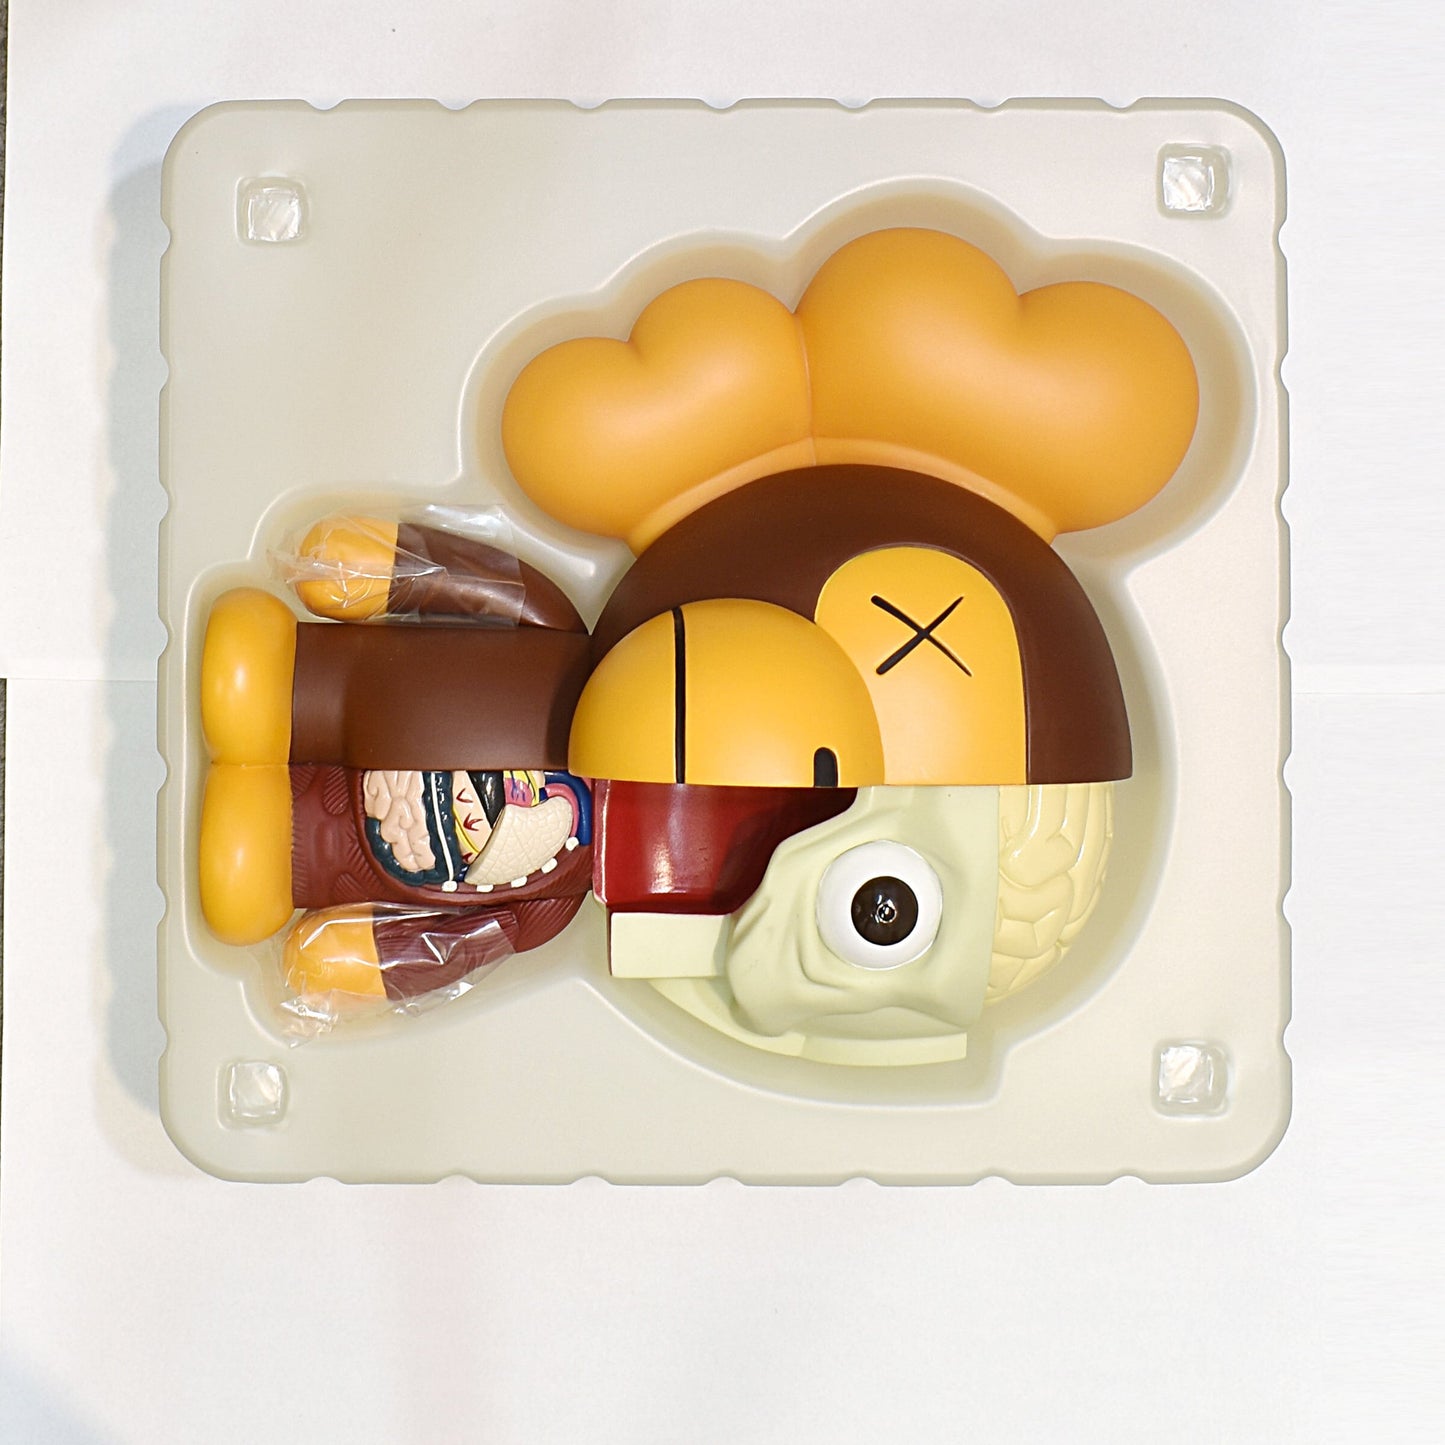 KAWS カウズ MILO マイロ 人体模型 茶猿 A BATHING APE × Original Fake オリジナルフェイク 赤箱 開封品